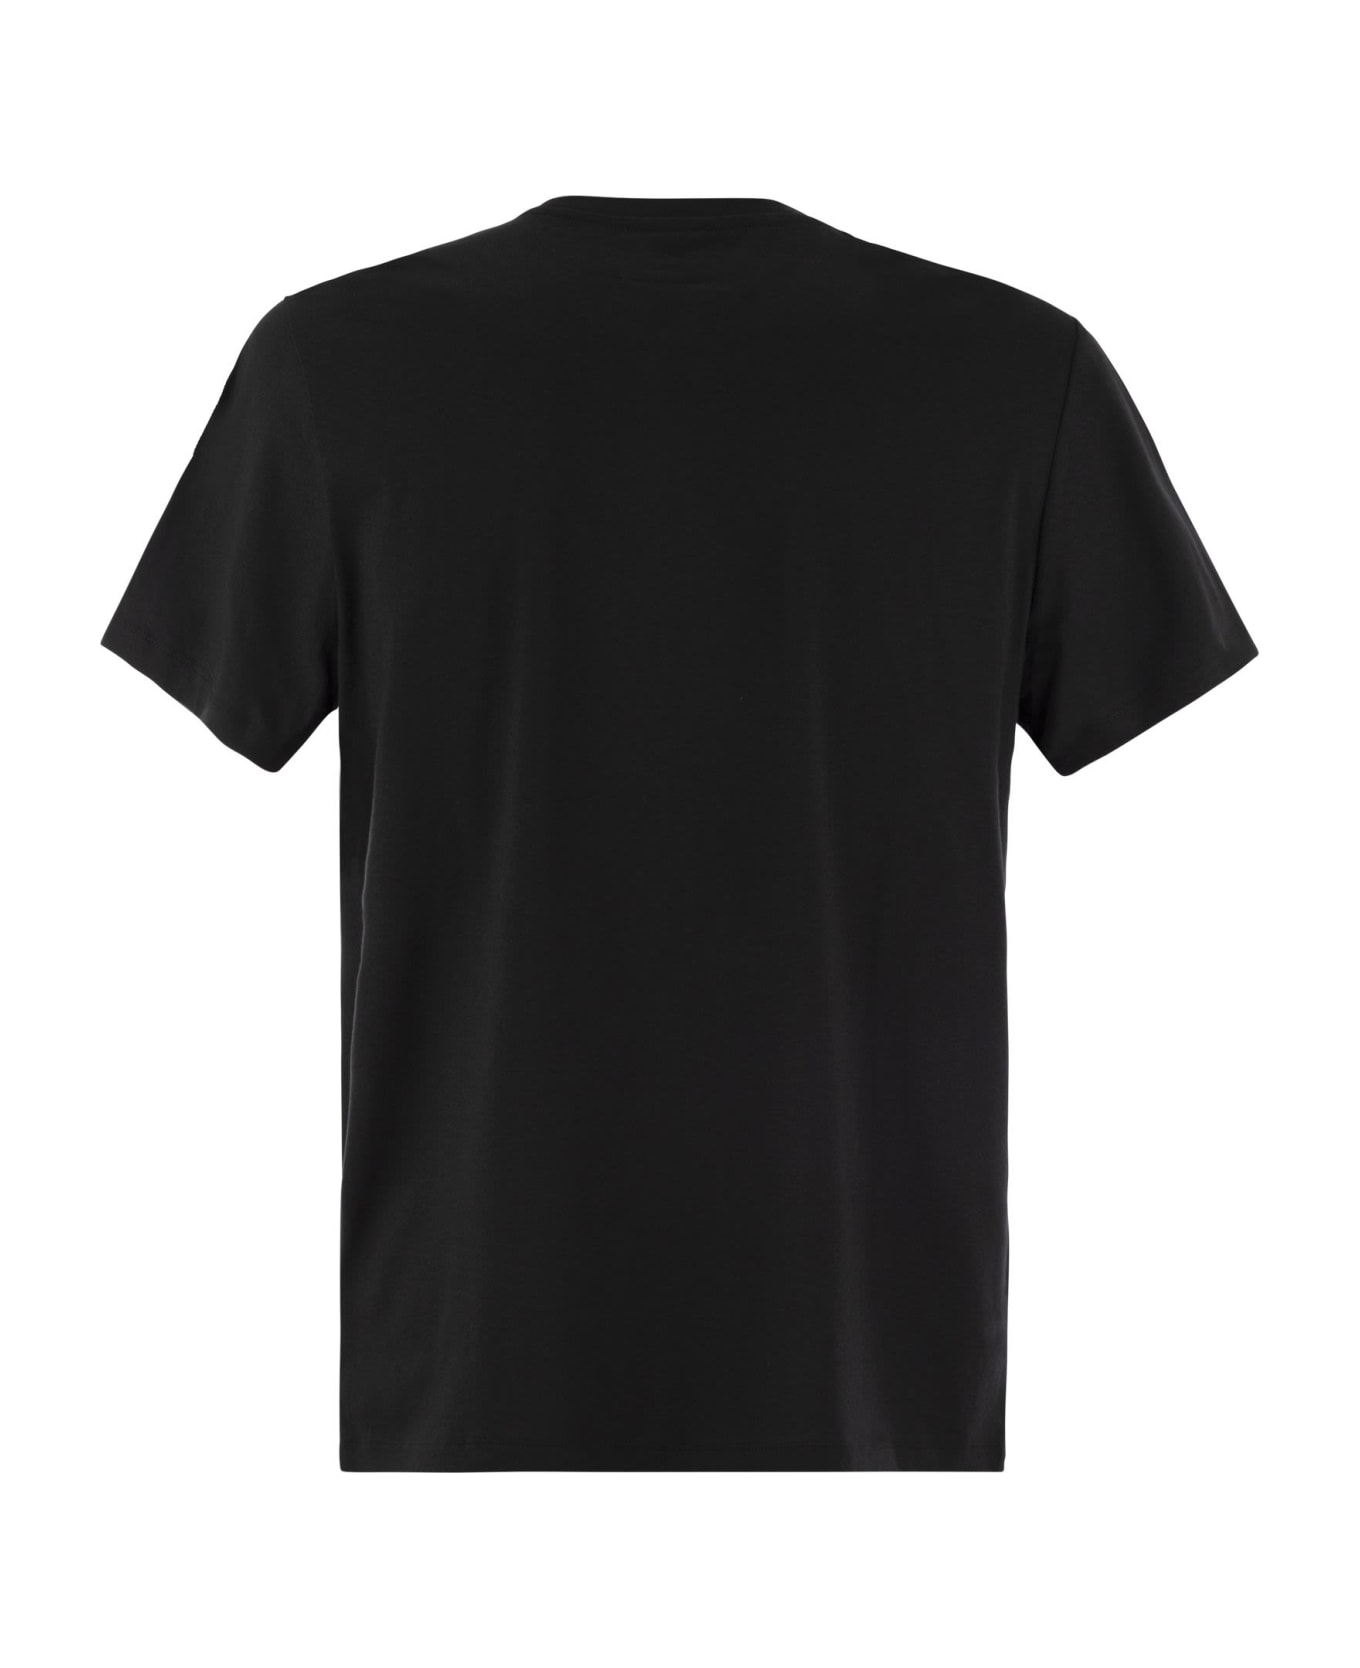 Parajumpers Shispare Tee - Cotton Jersey T-shirt - Black